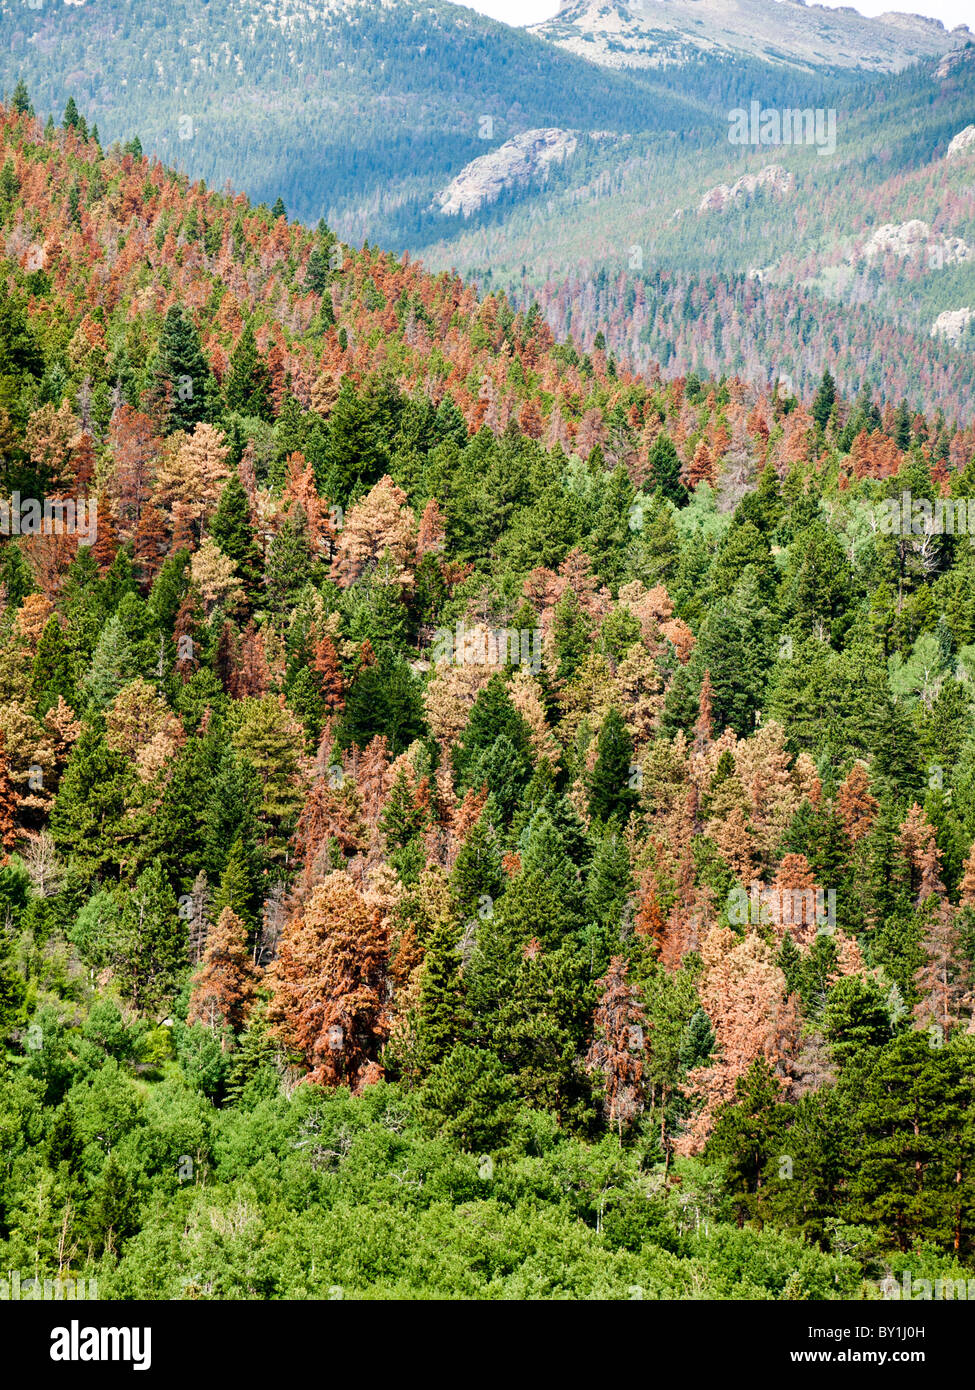 Estes park Colorado and mountain pine beetle infestation Stock Photo